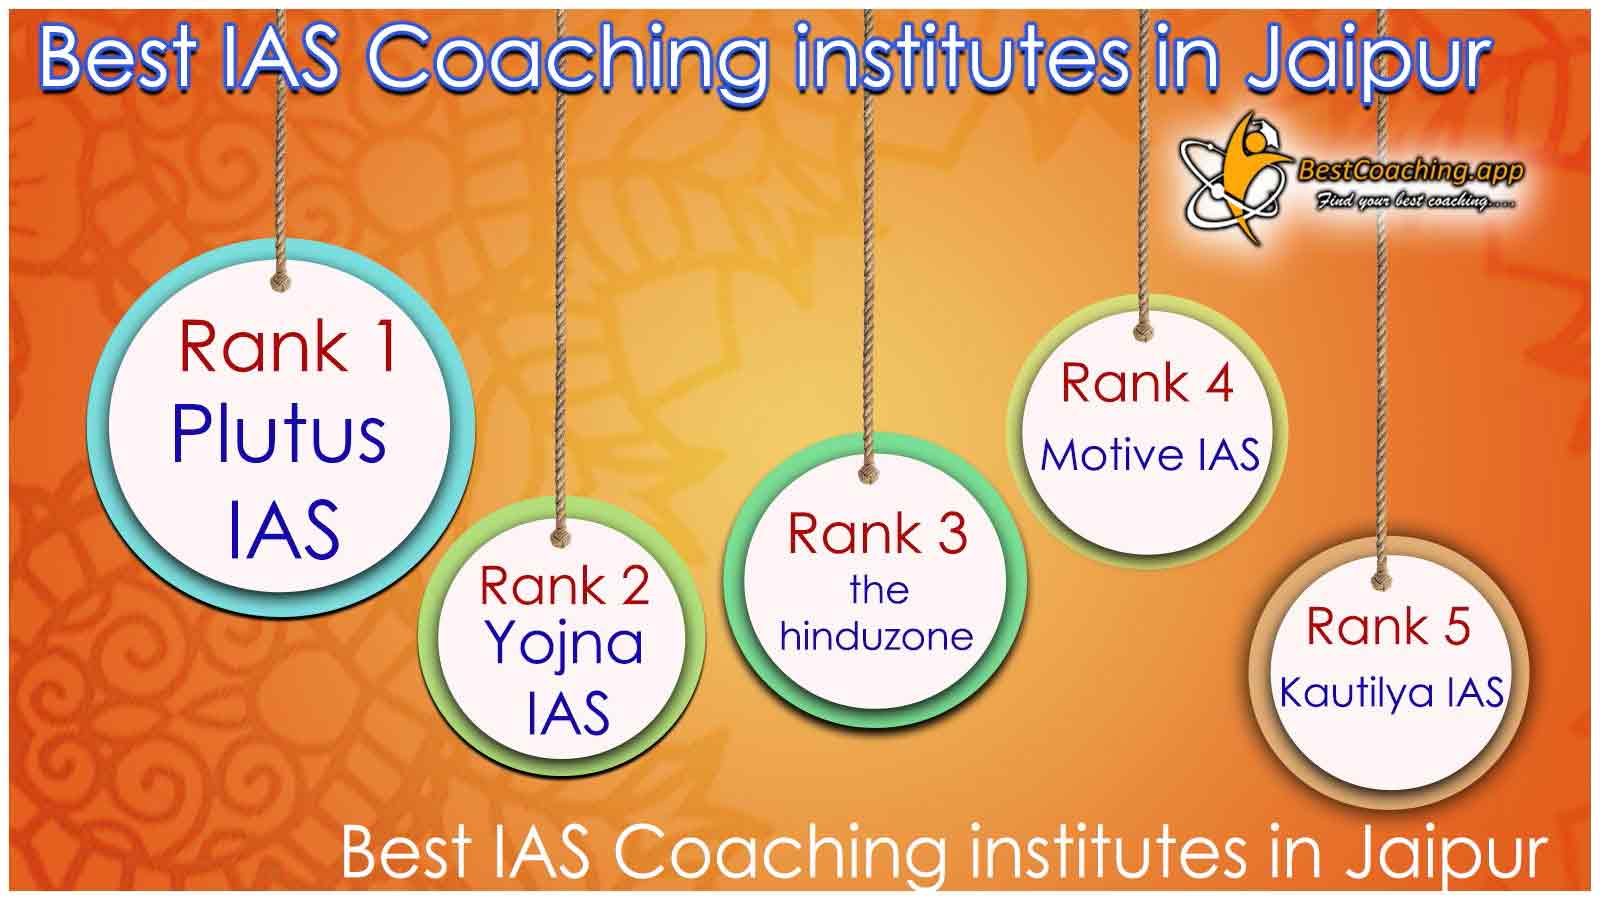 Best IAS Coaching In Jaipur